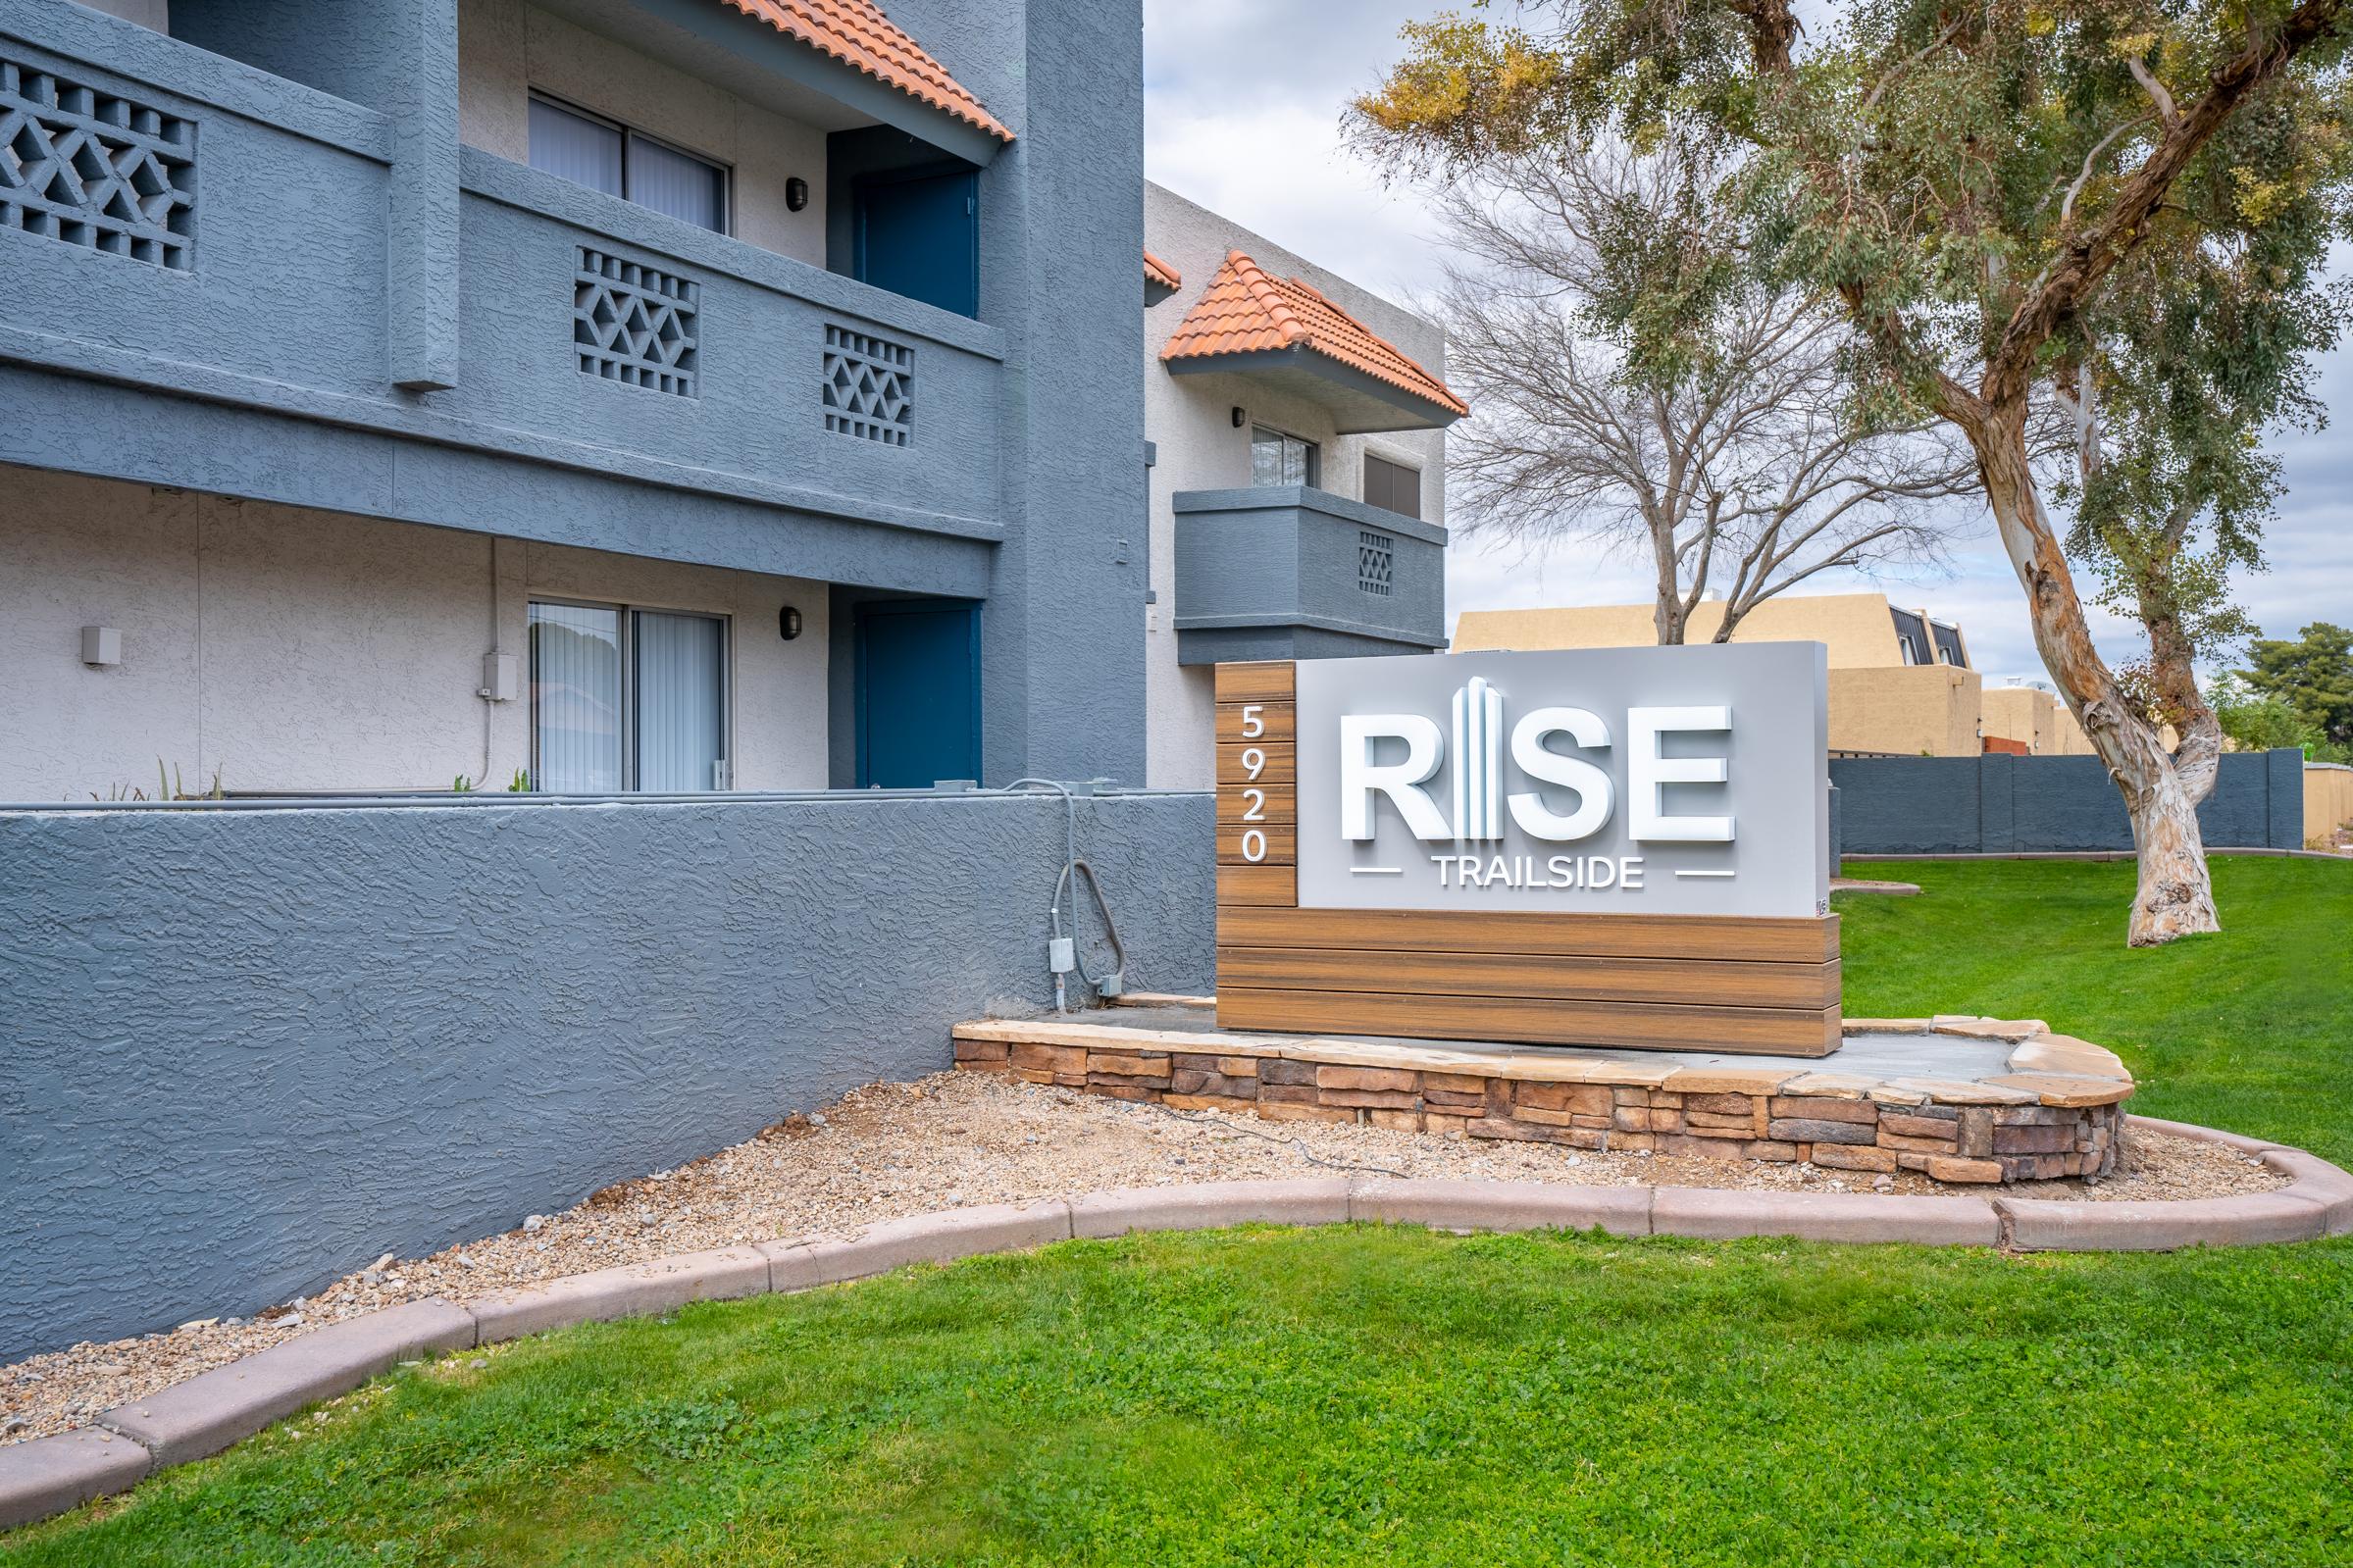 Rise at Trailside in Glendale, AZ entryway signage. 